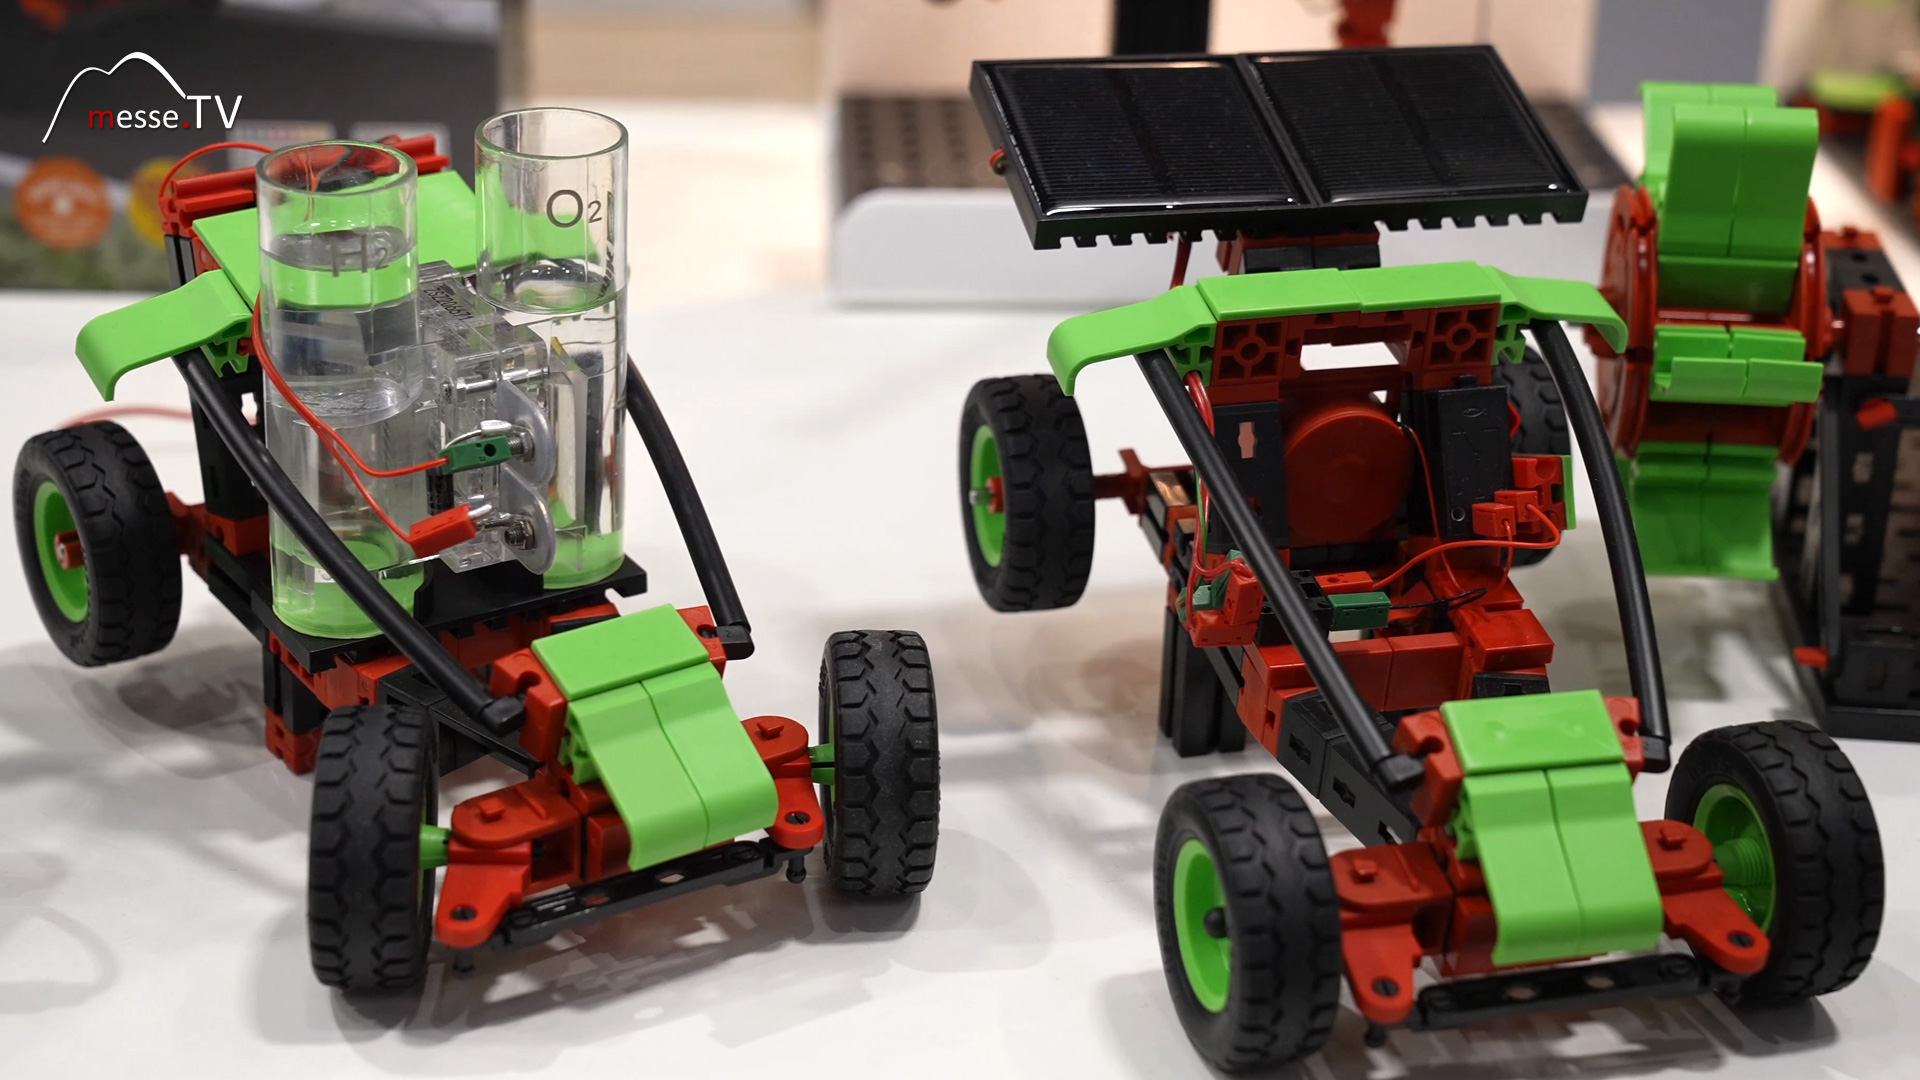 Robotics fischertechnik construction toys renewable energy